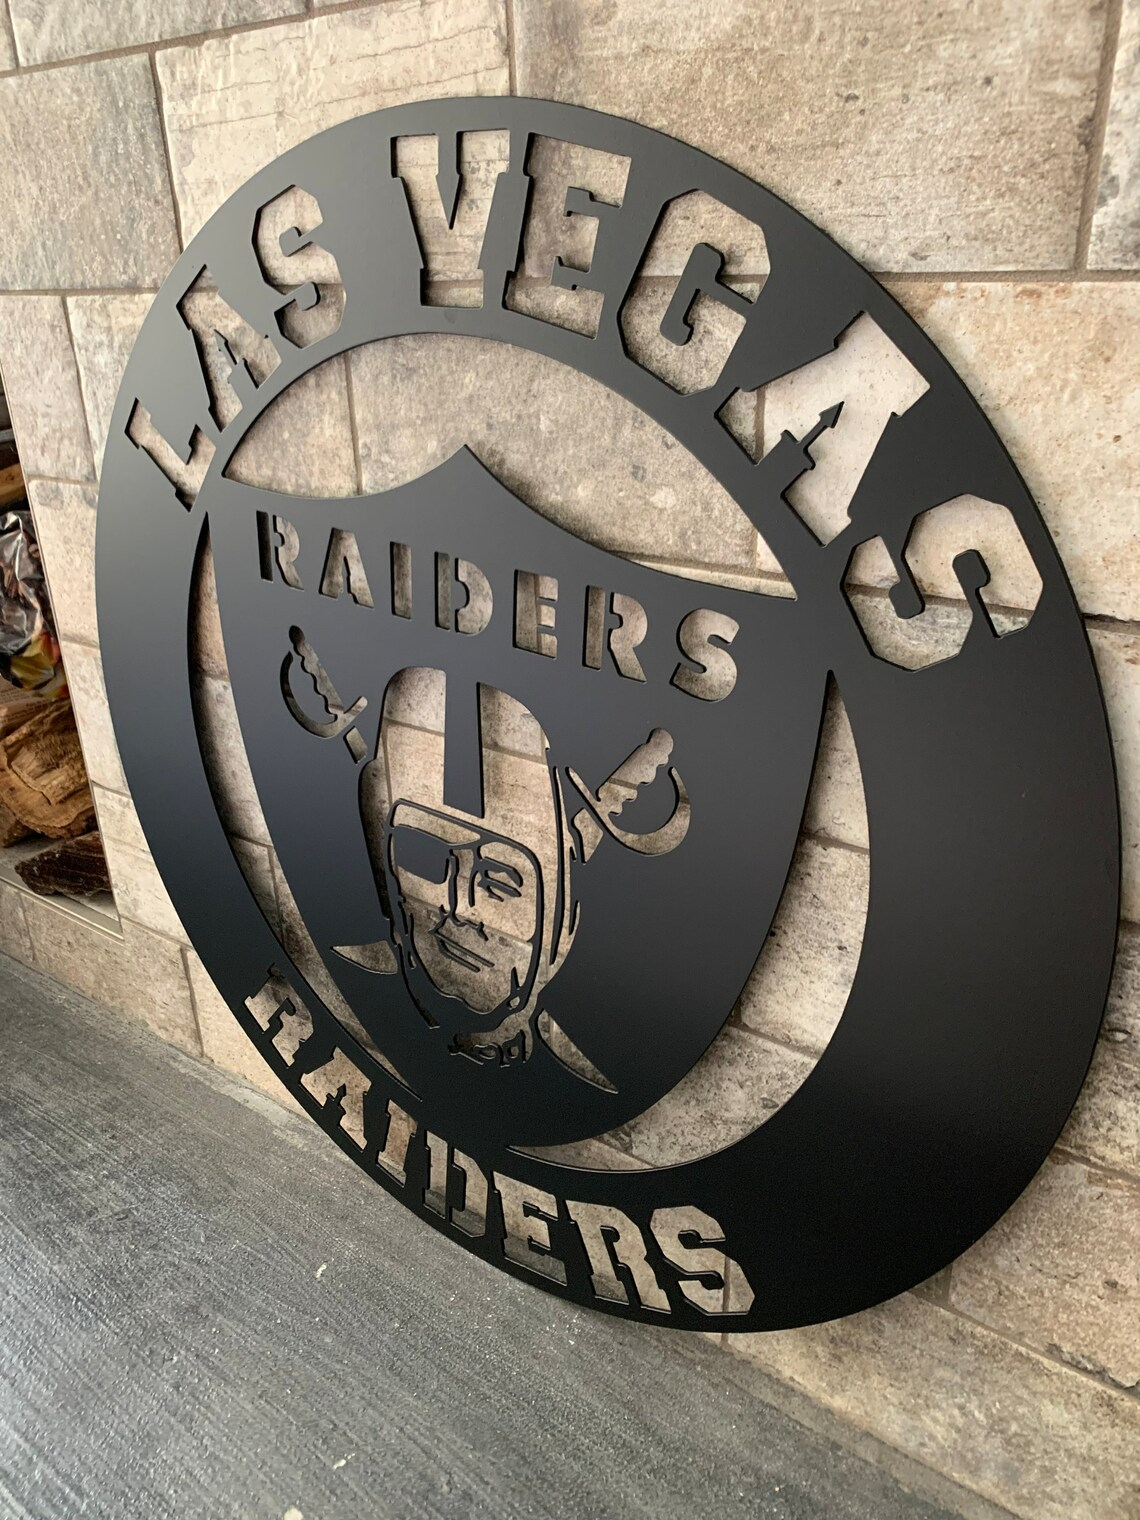 Las Vegas Raiders 12 x 8 Sports Bar Metal Sign